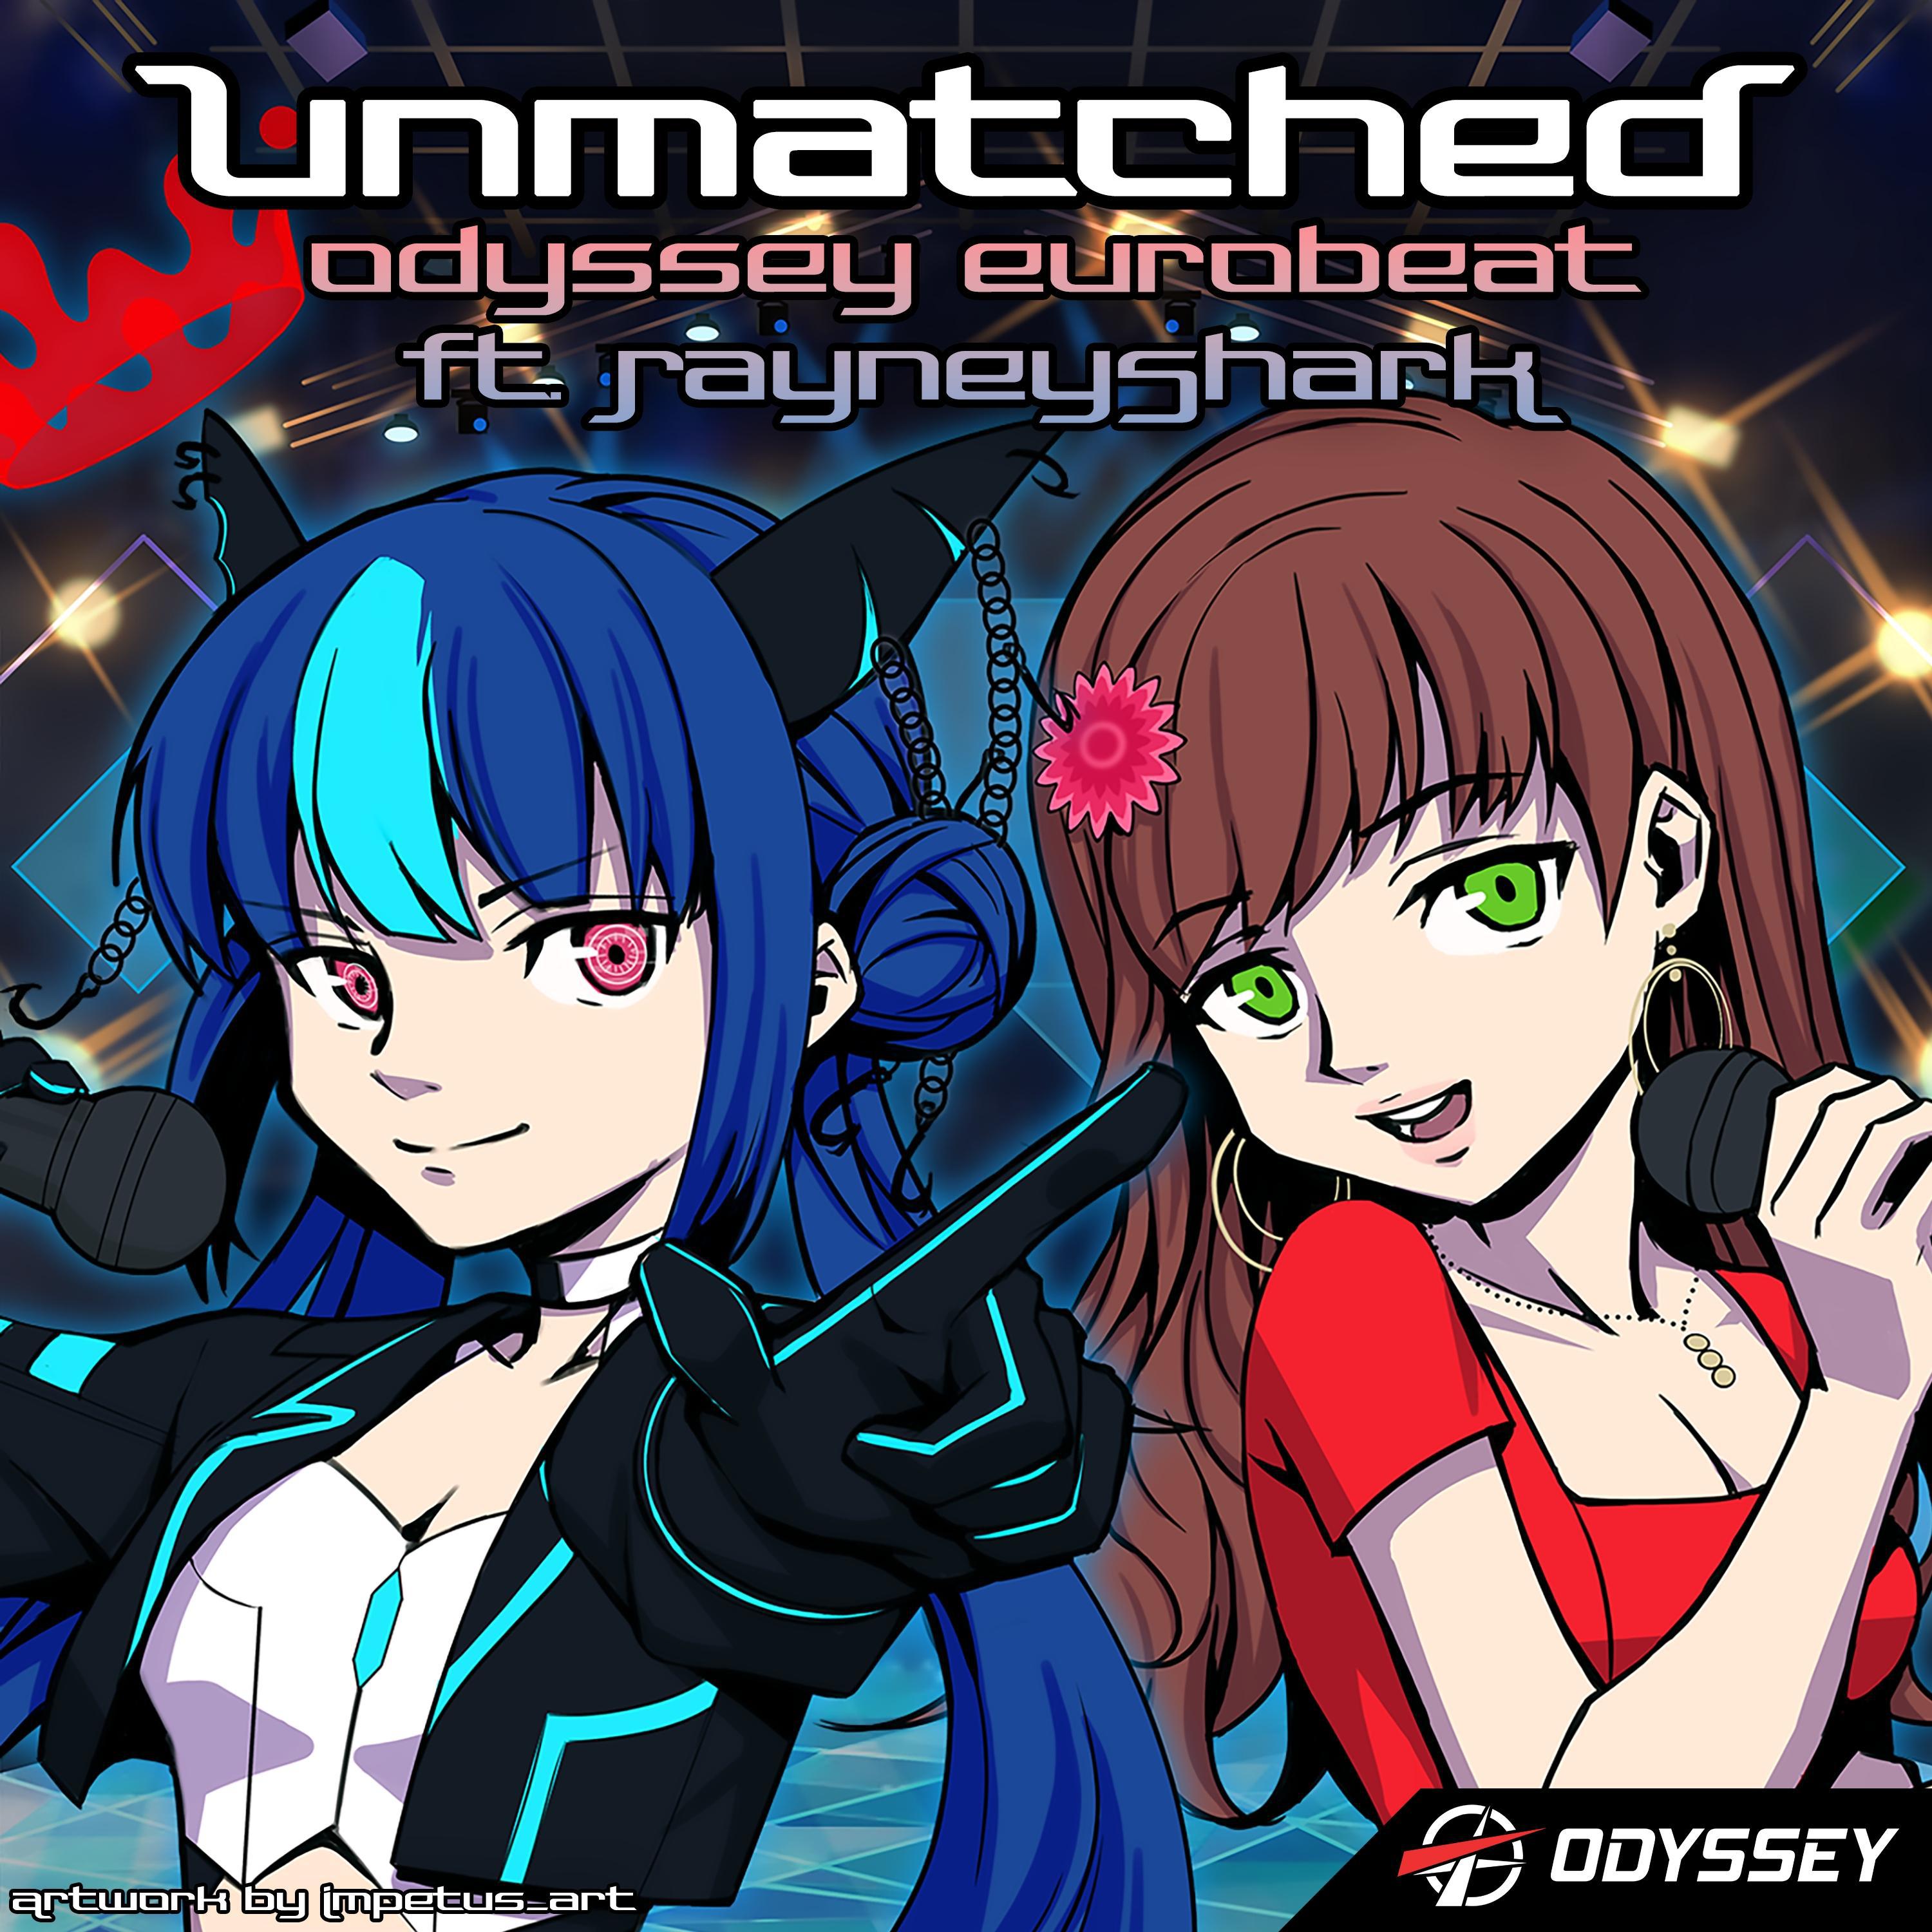 Odyssey Eurobeat - Unmatched (feat. RayneyShark) (Acapella)